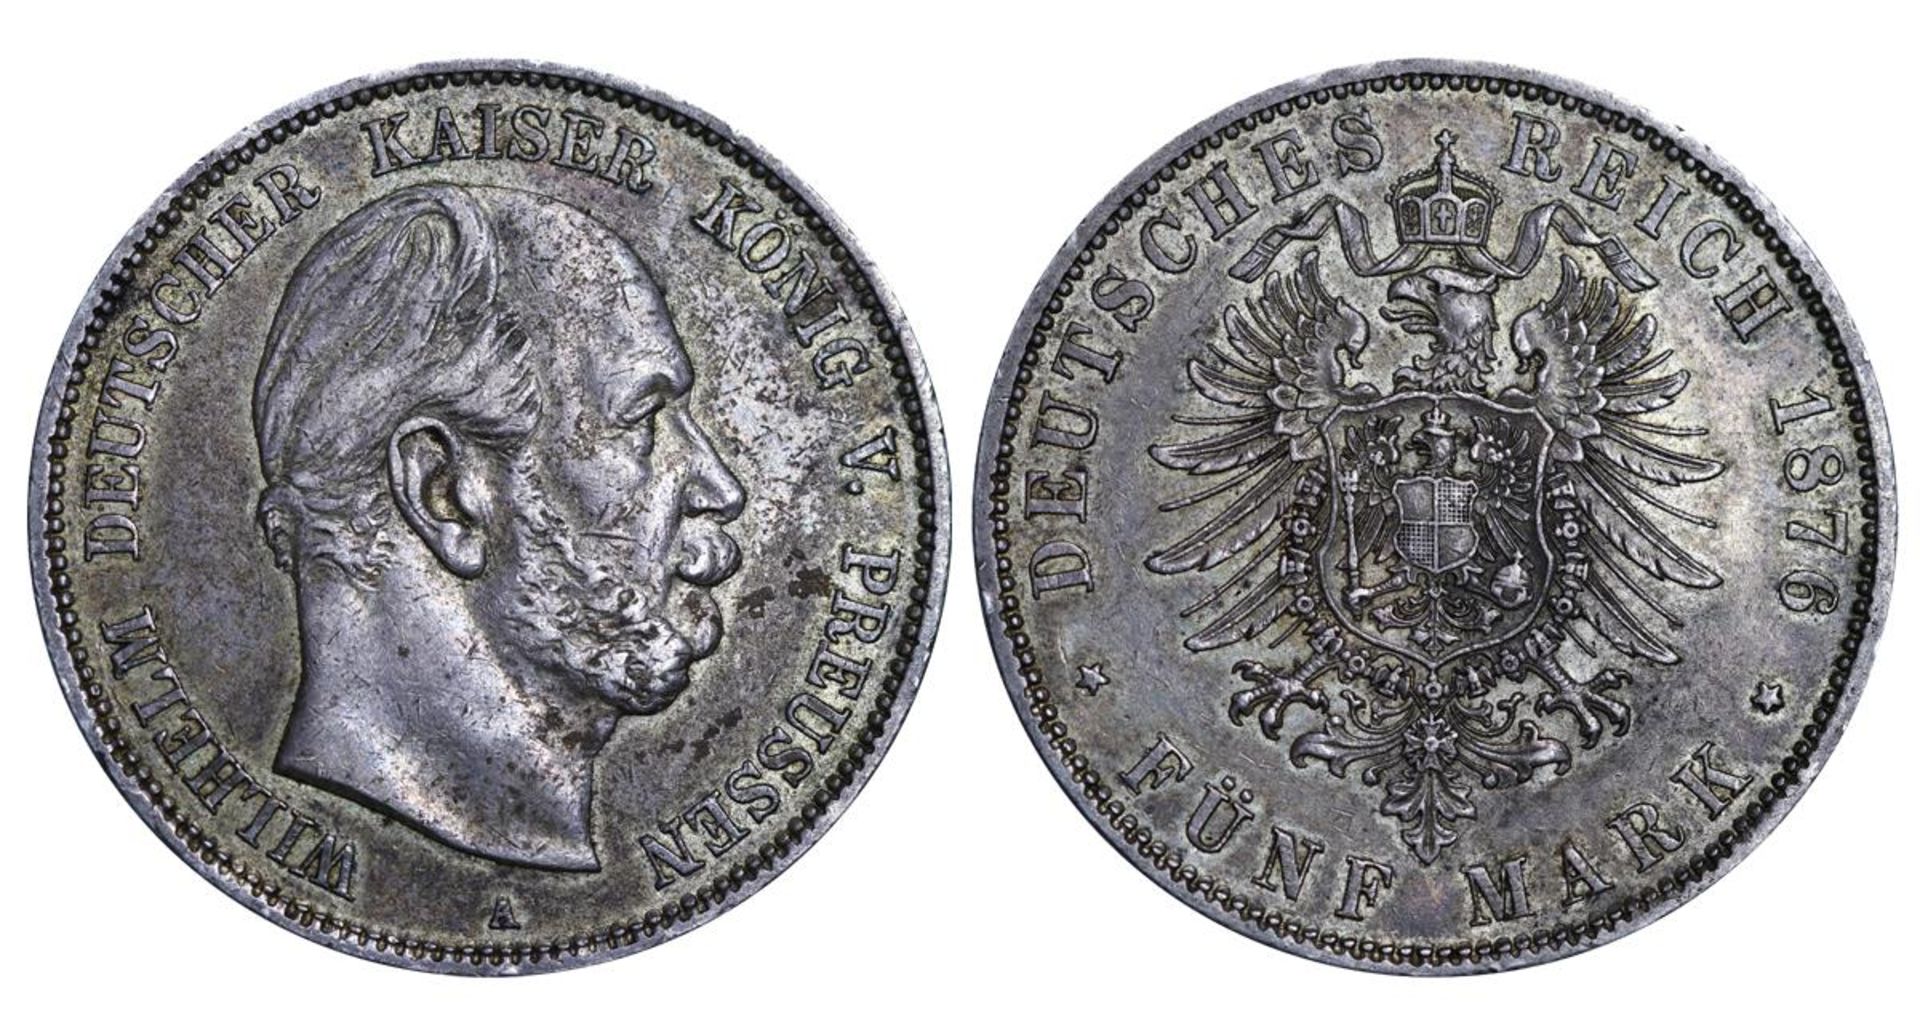 Kingdom of Prussia, 5 Mark, 1876 year, A